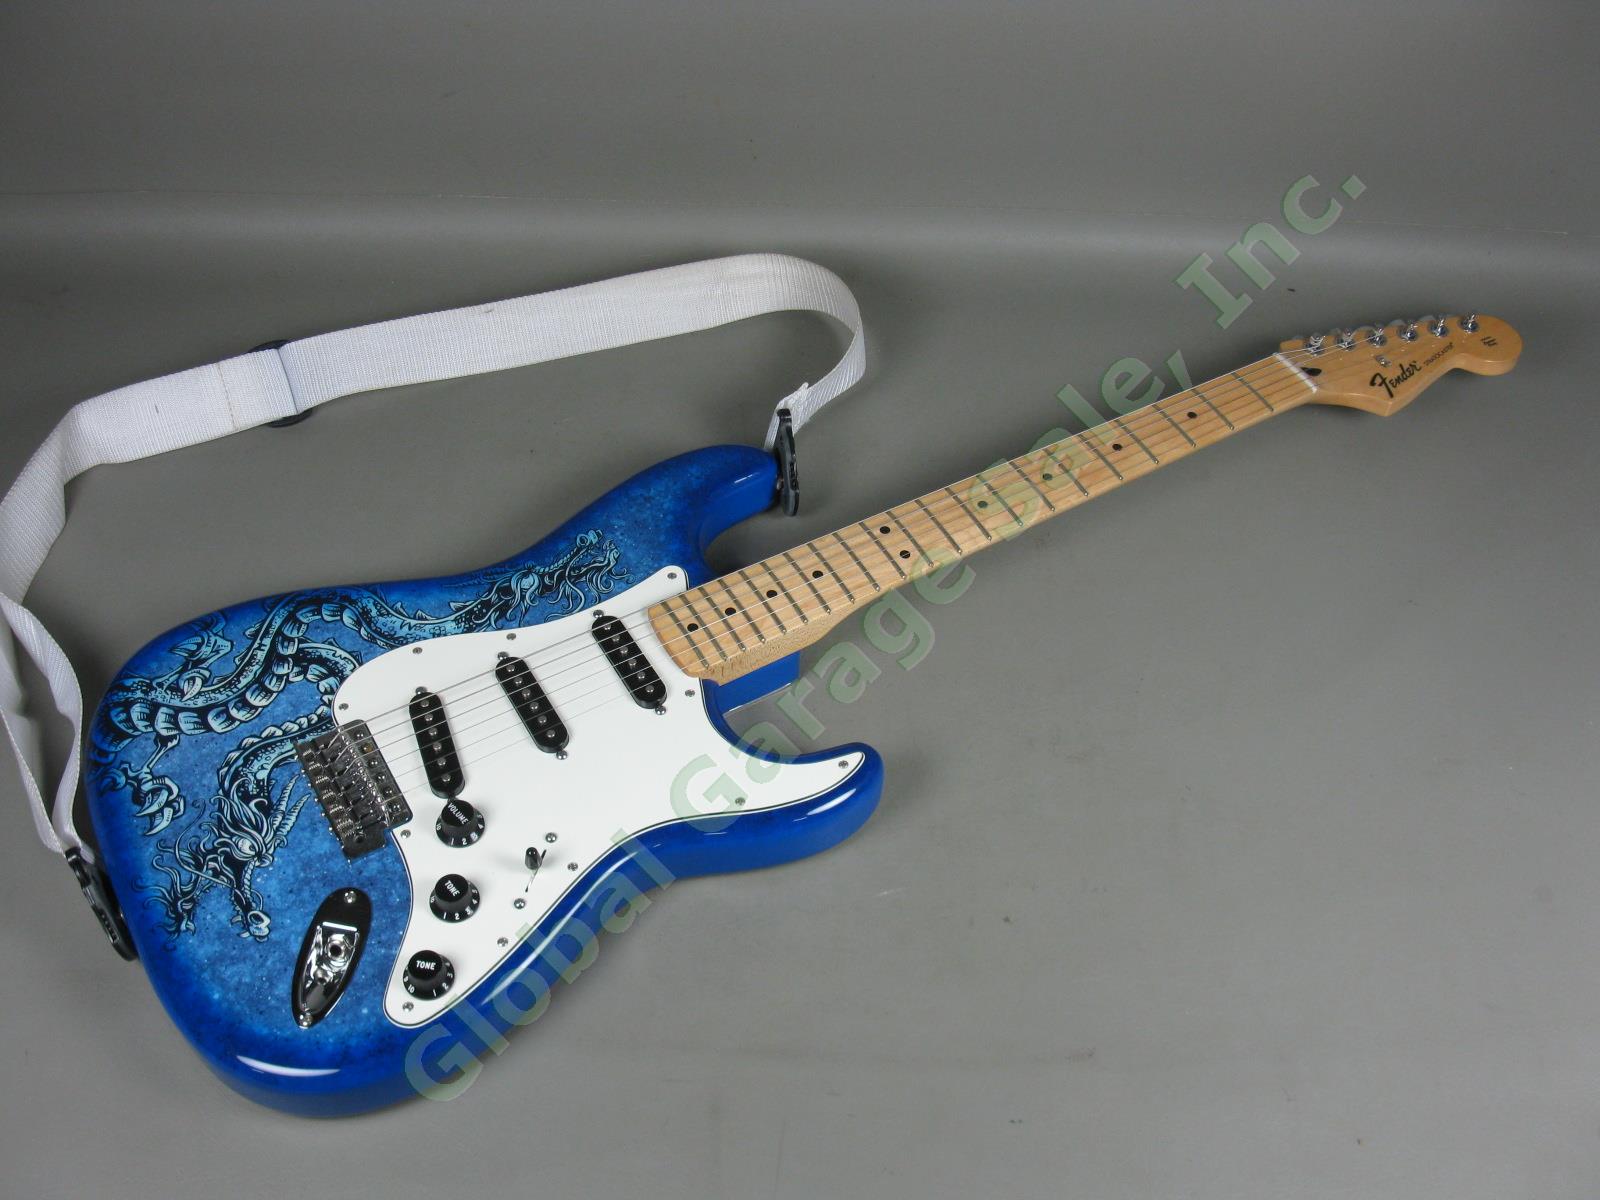 MINT! 2015 Fender David Lozeau Blue Dragon Stratocaster Electric Guitar w/Case 1